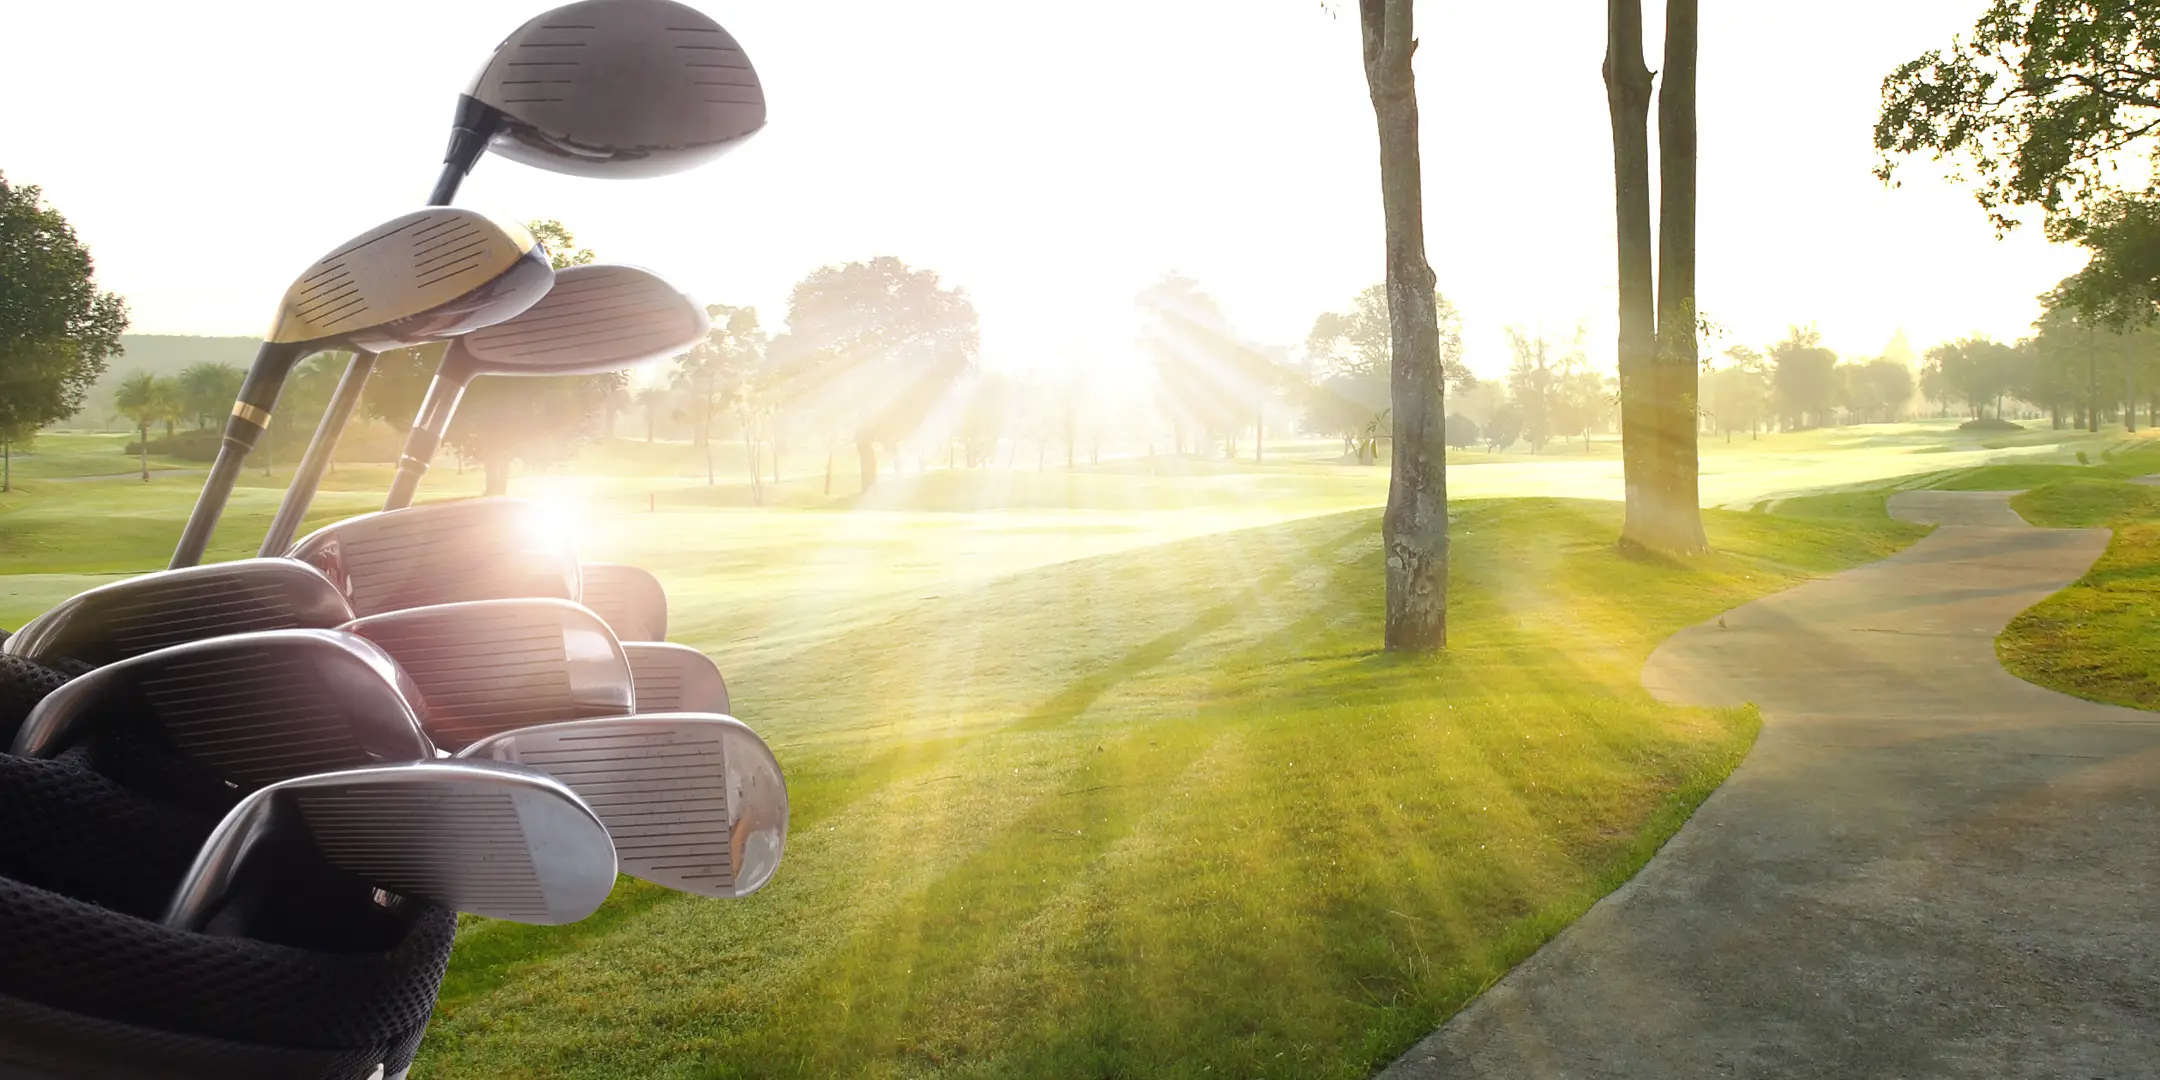 Golf Course view with sun shining through